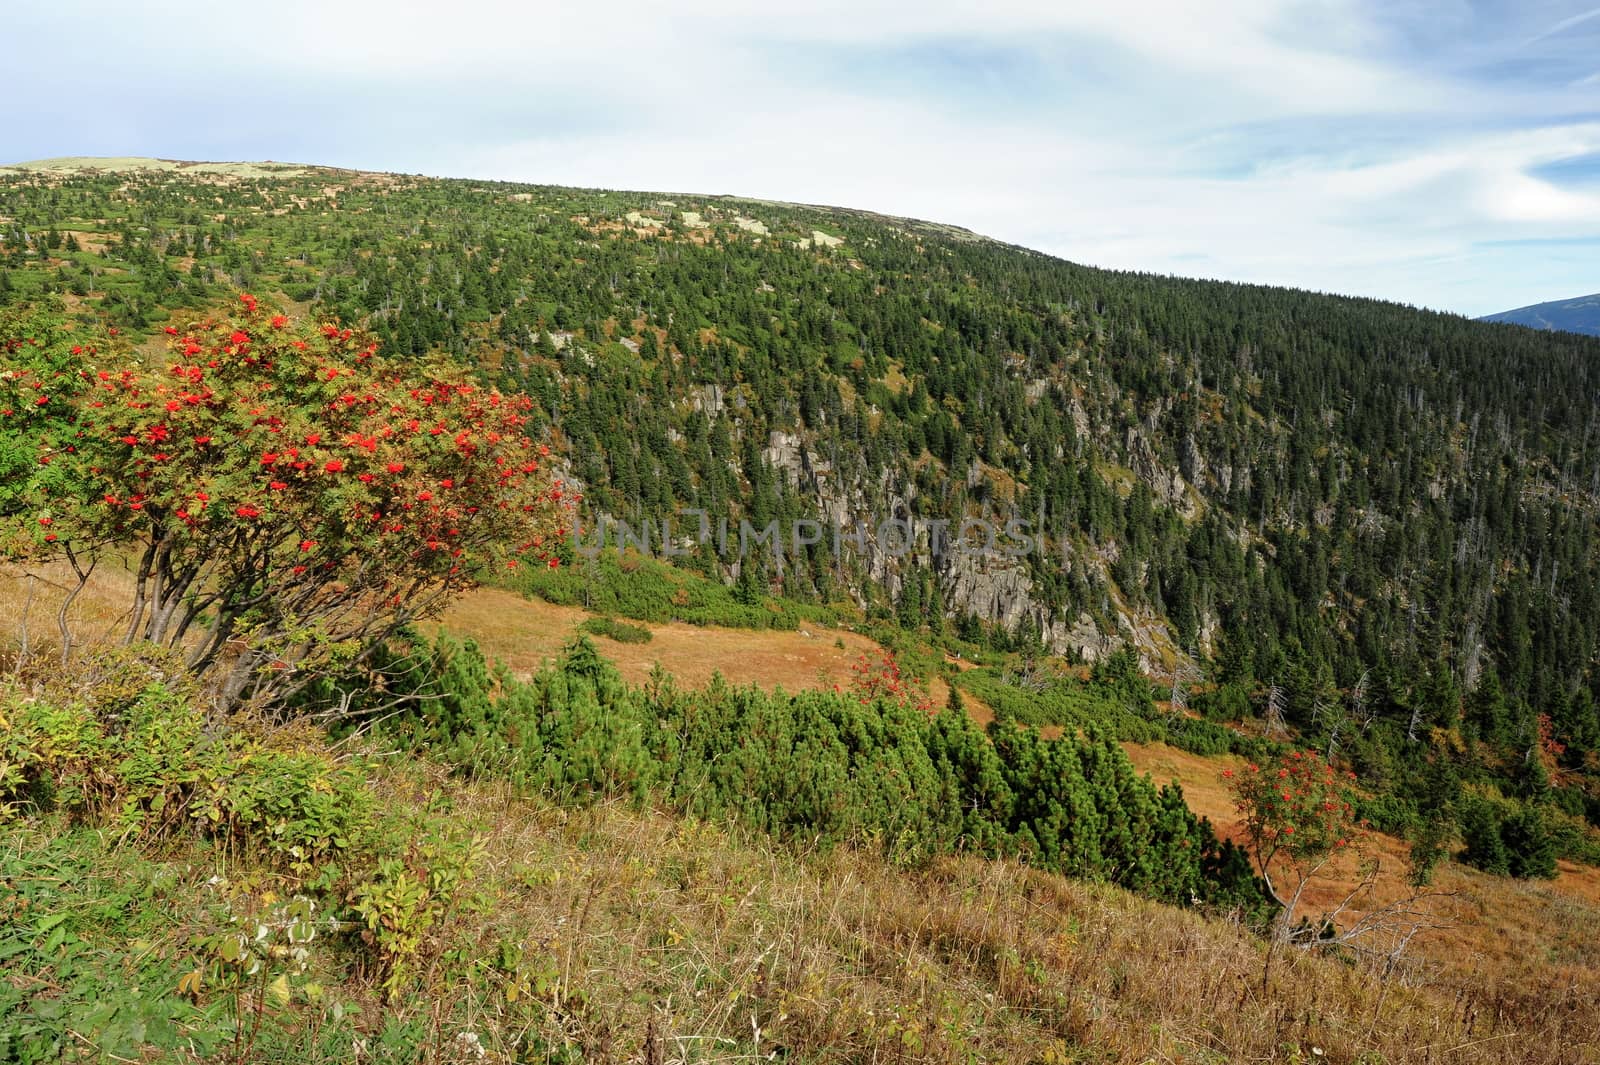 View of the rocky landscape of the Krkonose